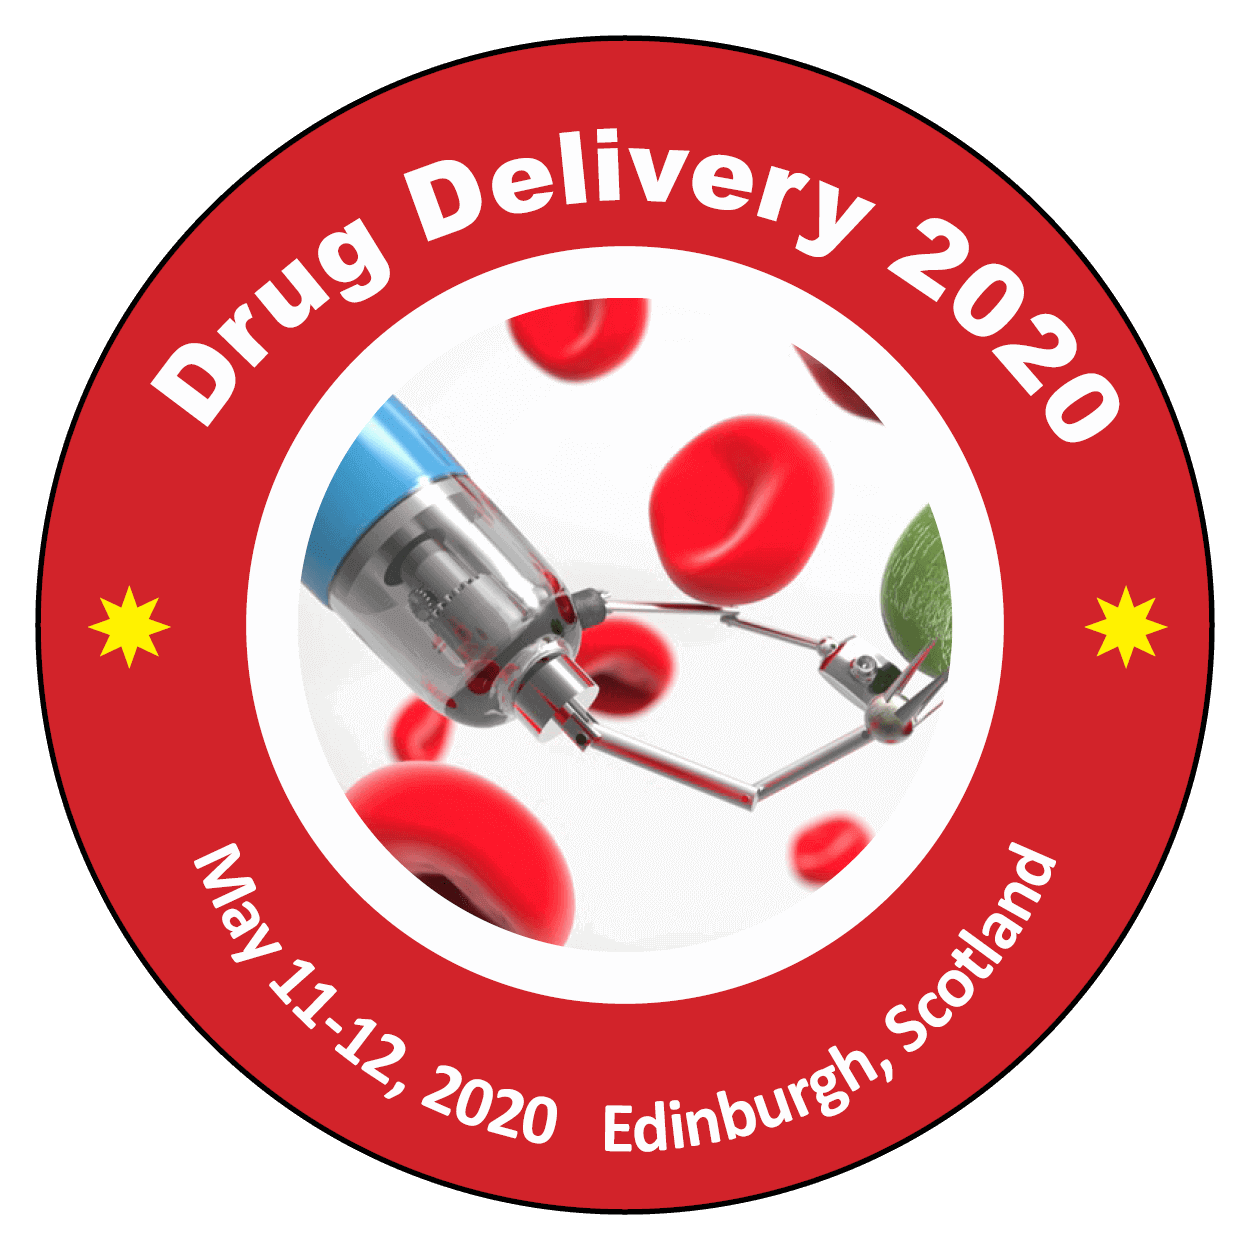 International Conference on Drug Delivery and Formulations